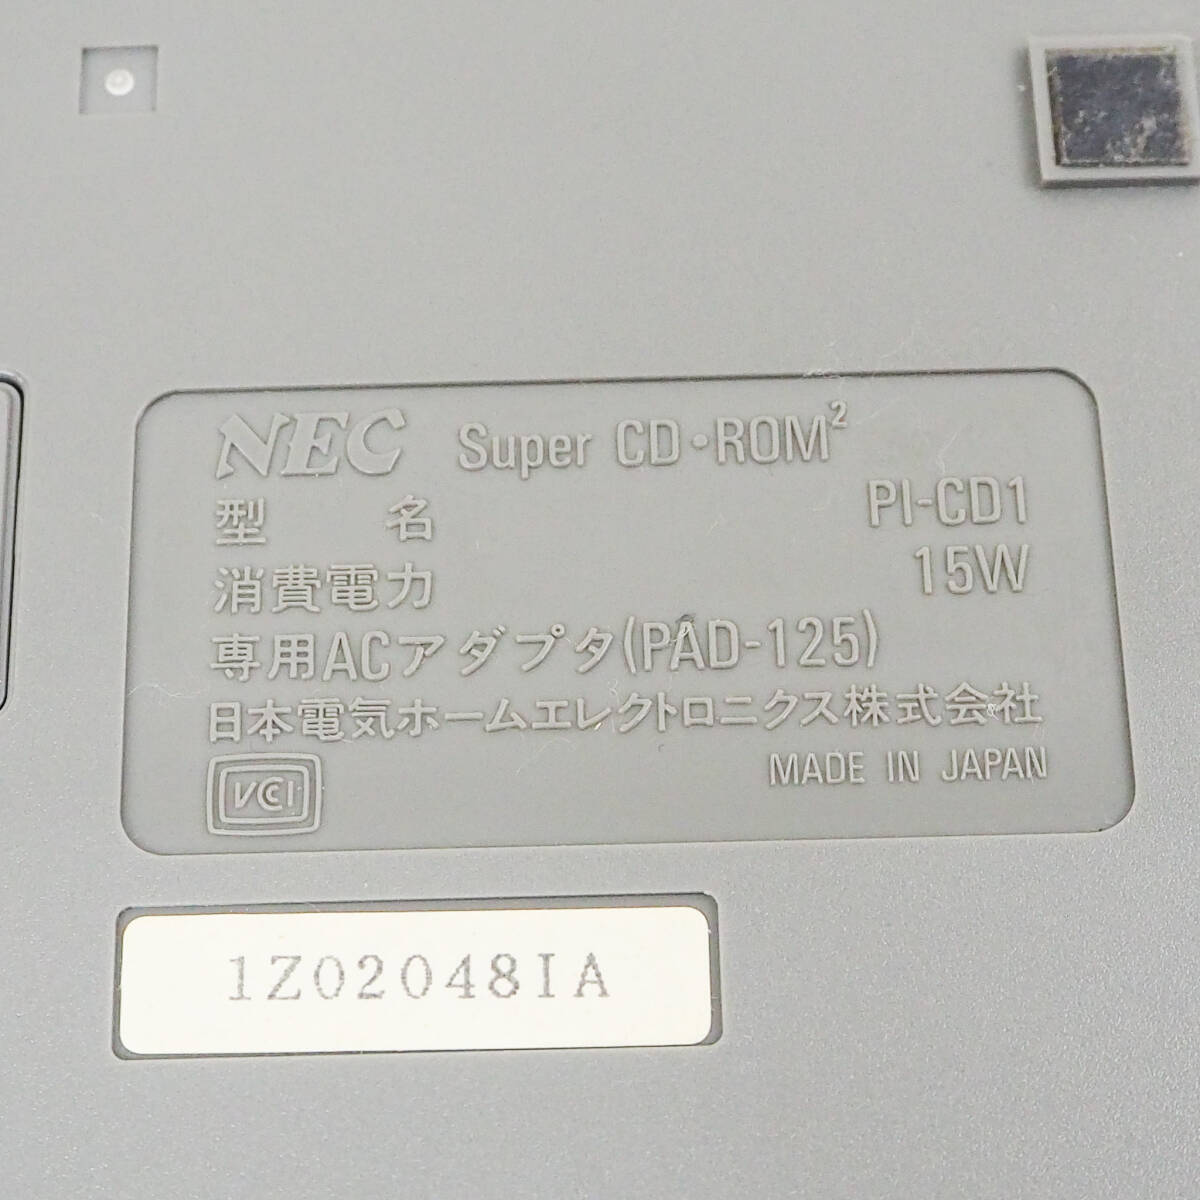 [ Junk ]NECeni-si-SUPER CD ROM2 super CD rom rom PI-CD1 body PC engine K5176